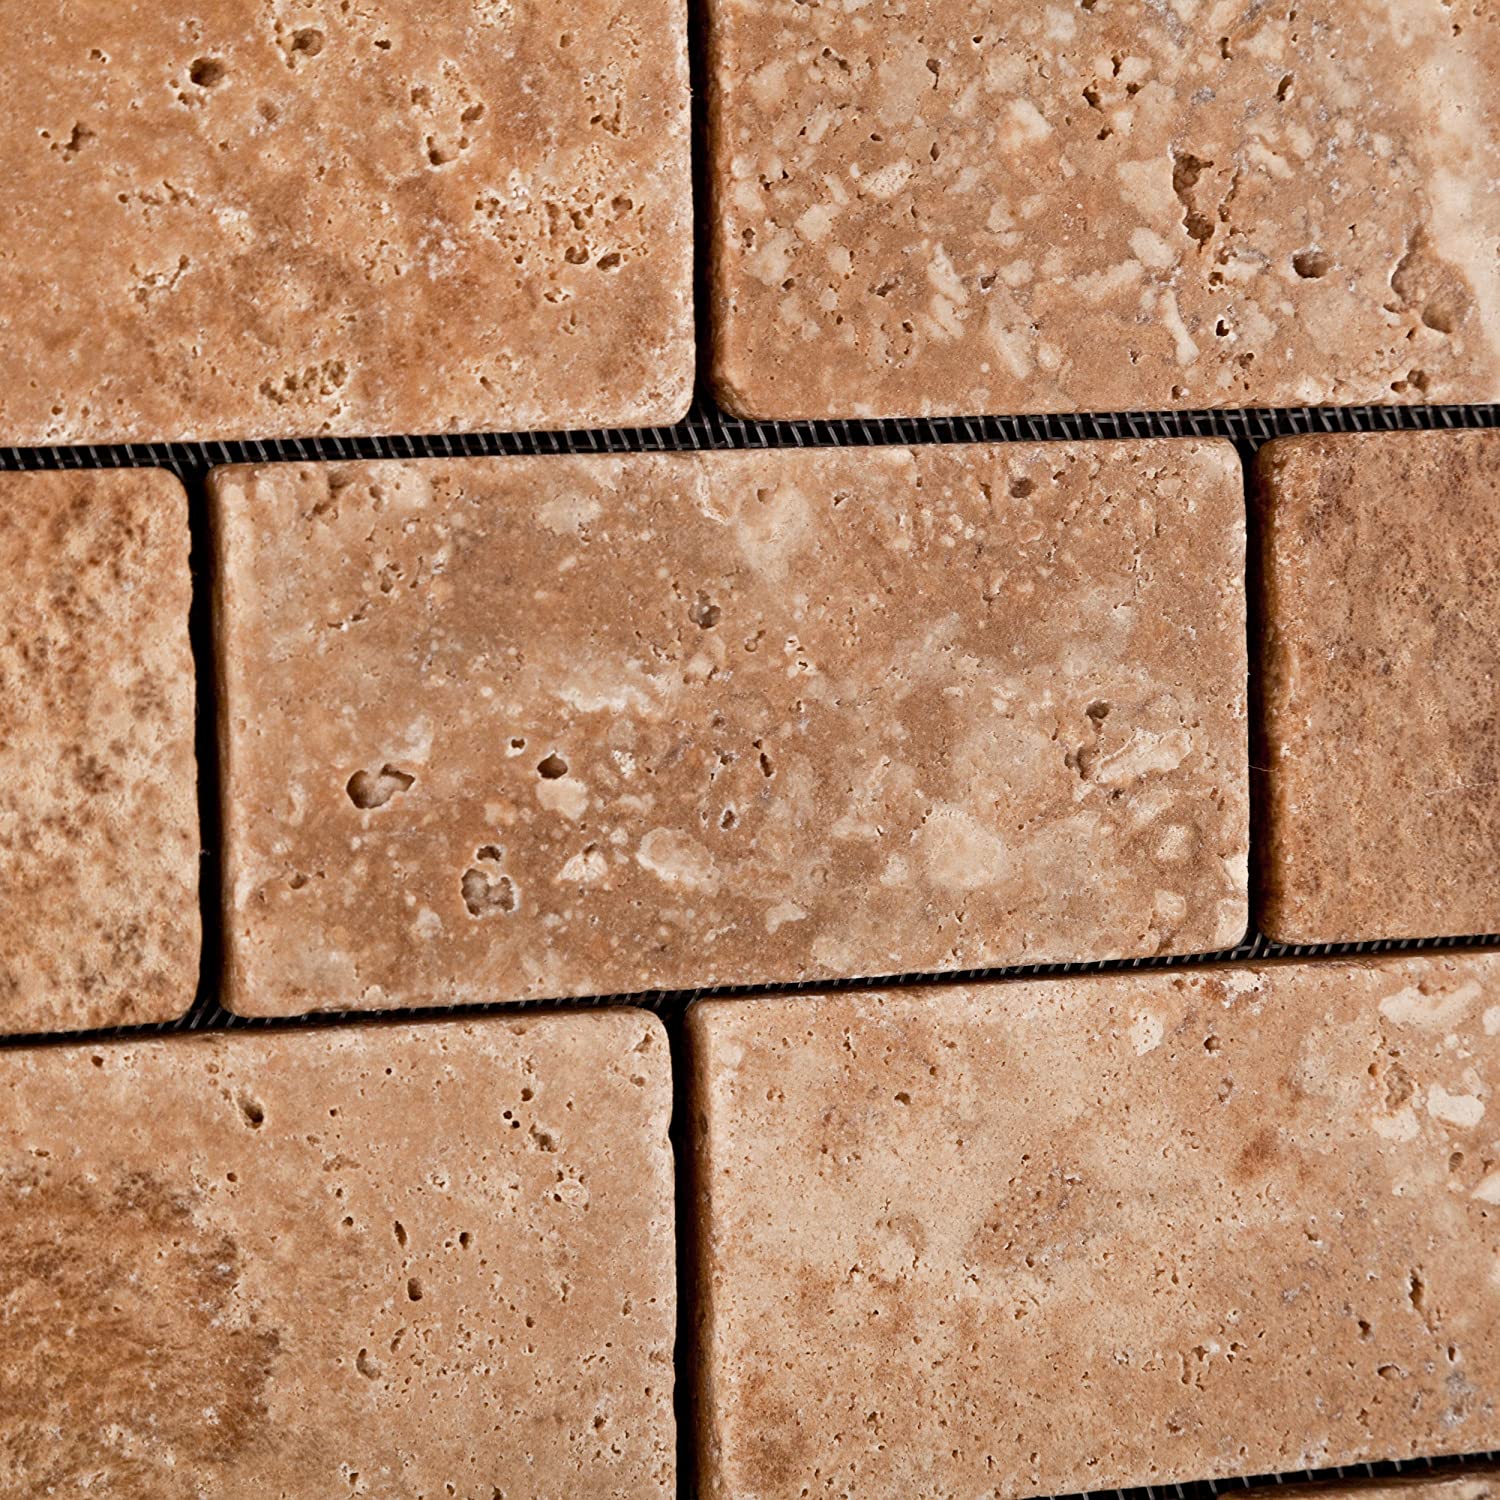 Andean Cream Peruvian Travertine 2x4 Tumbled Brick Mosaic Wall Backsplash Tile (Box of 5 Sheets)